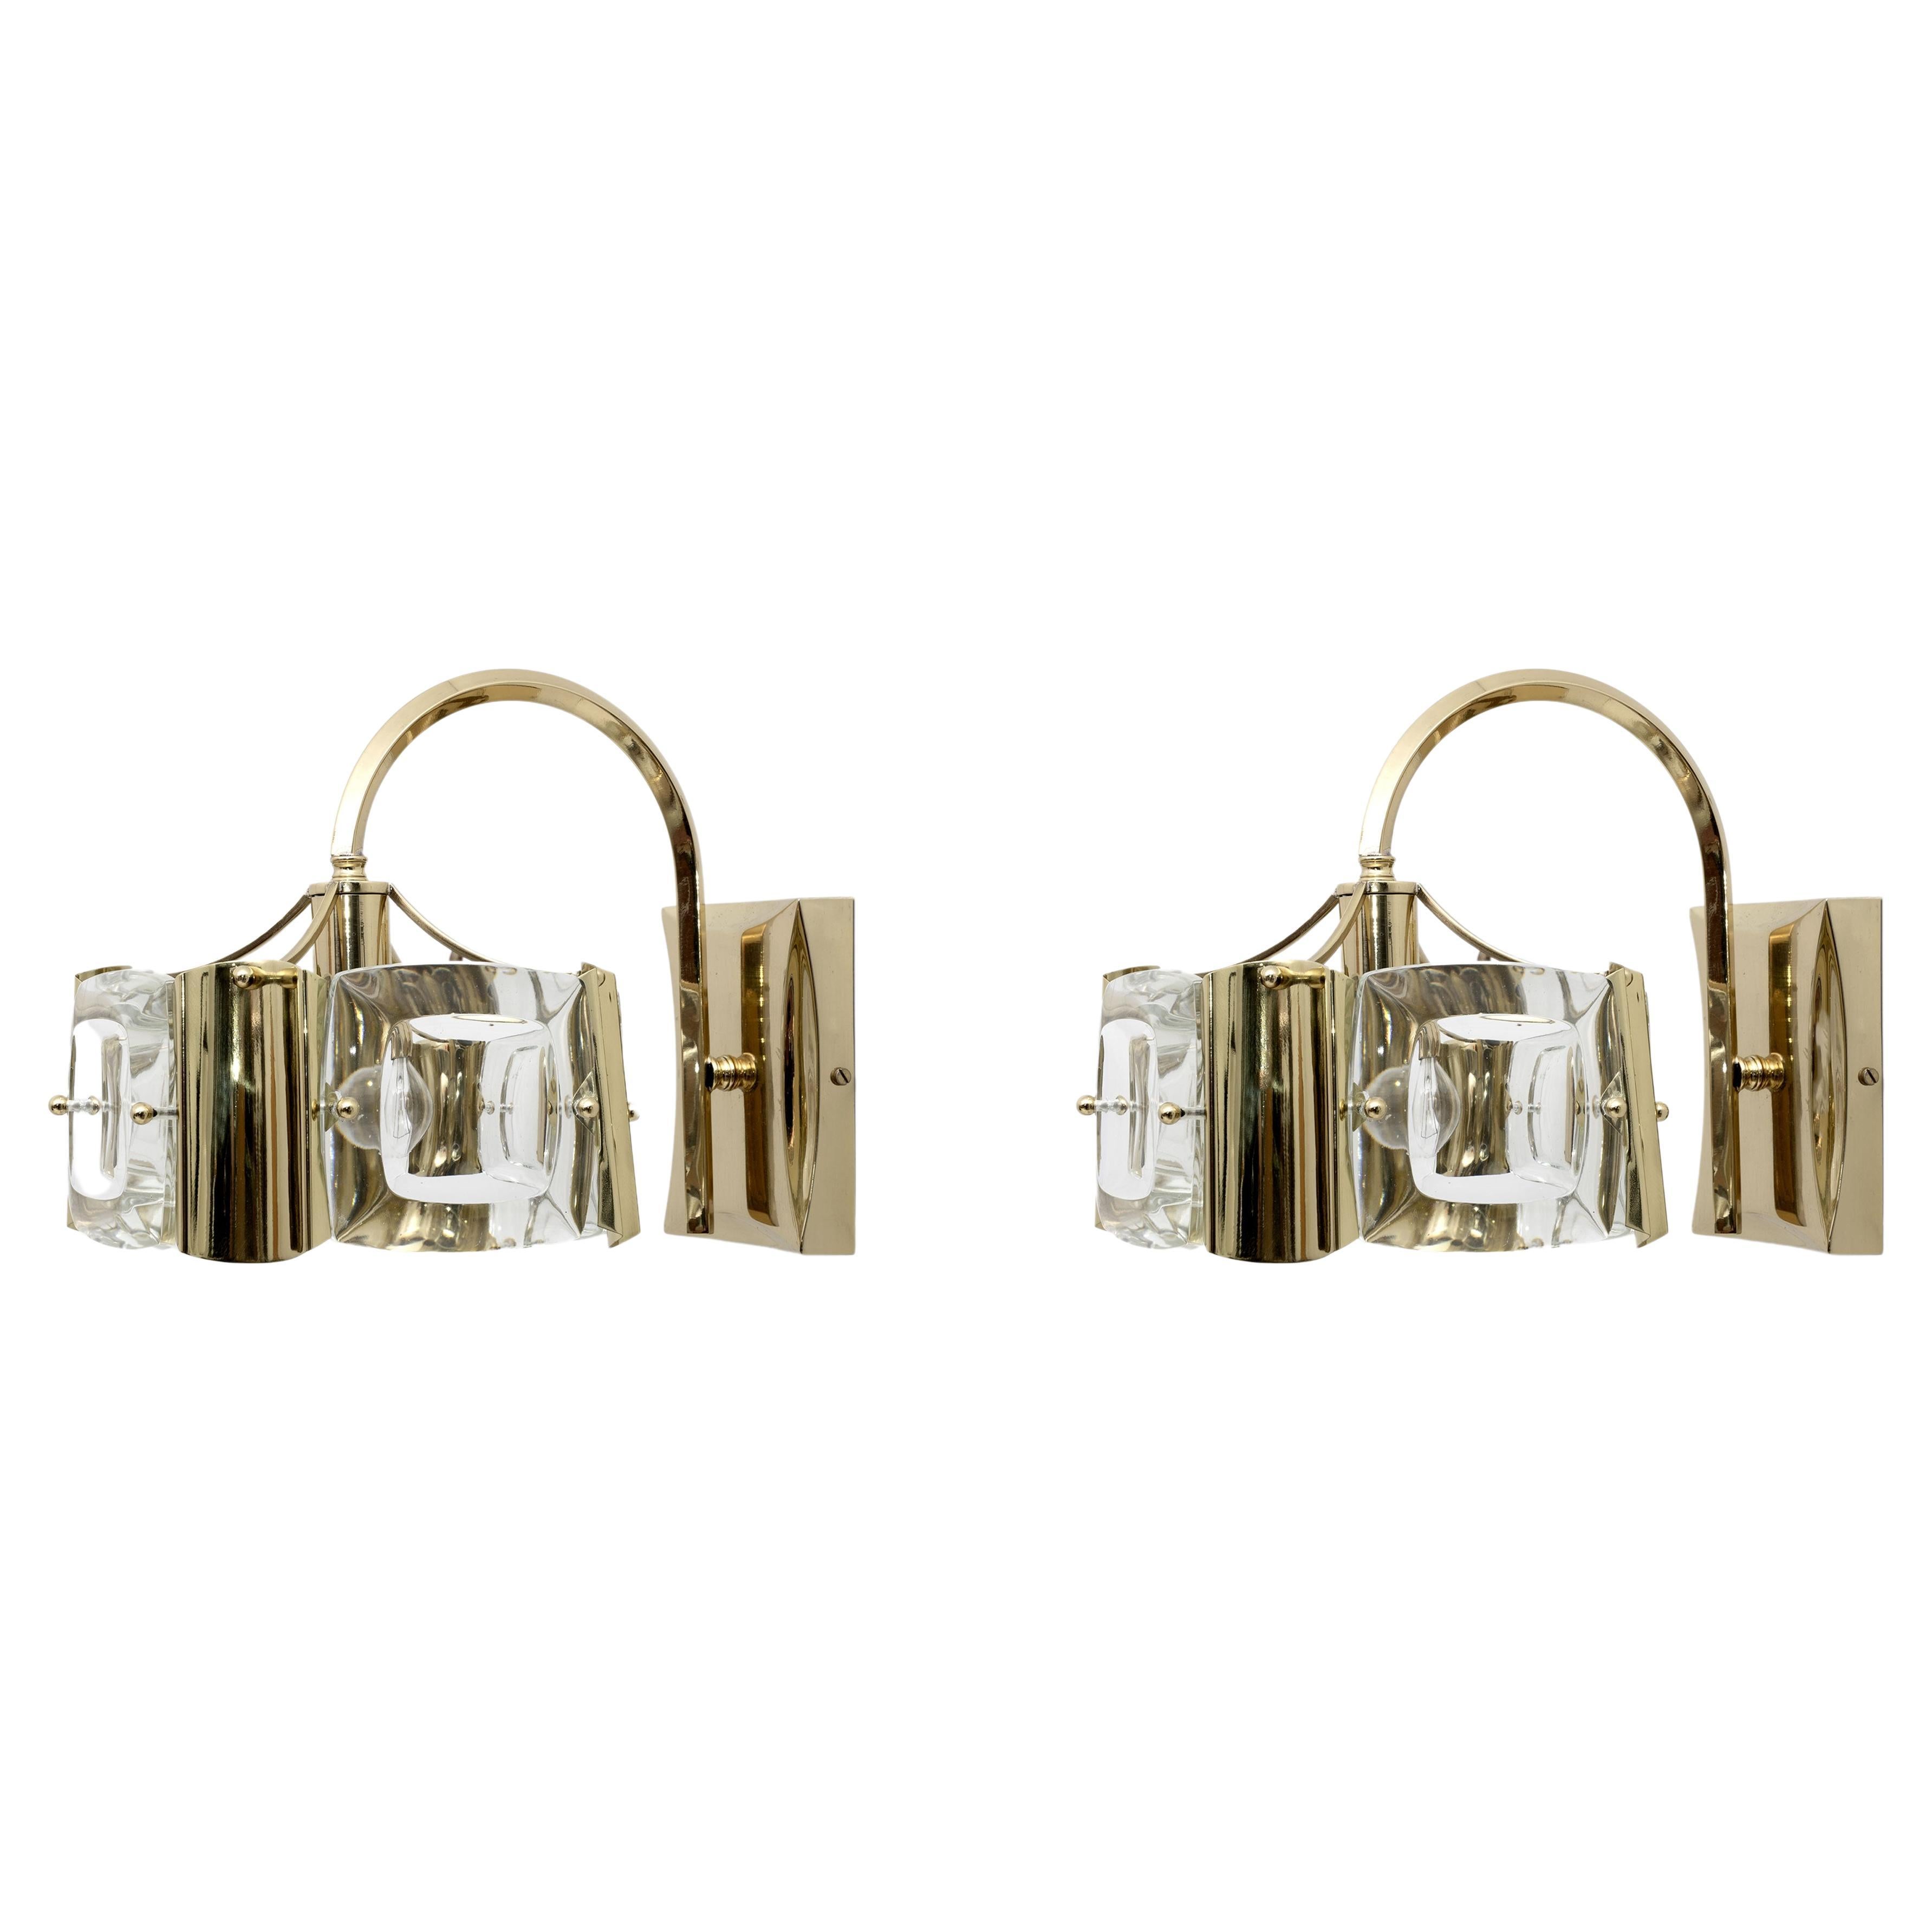 Oscar Torlasco Mid-Century Modern Italian Glass and Brass Sconces by Stilkronen For Sale